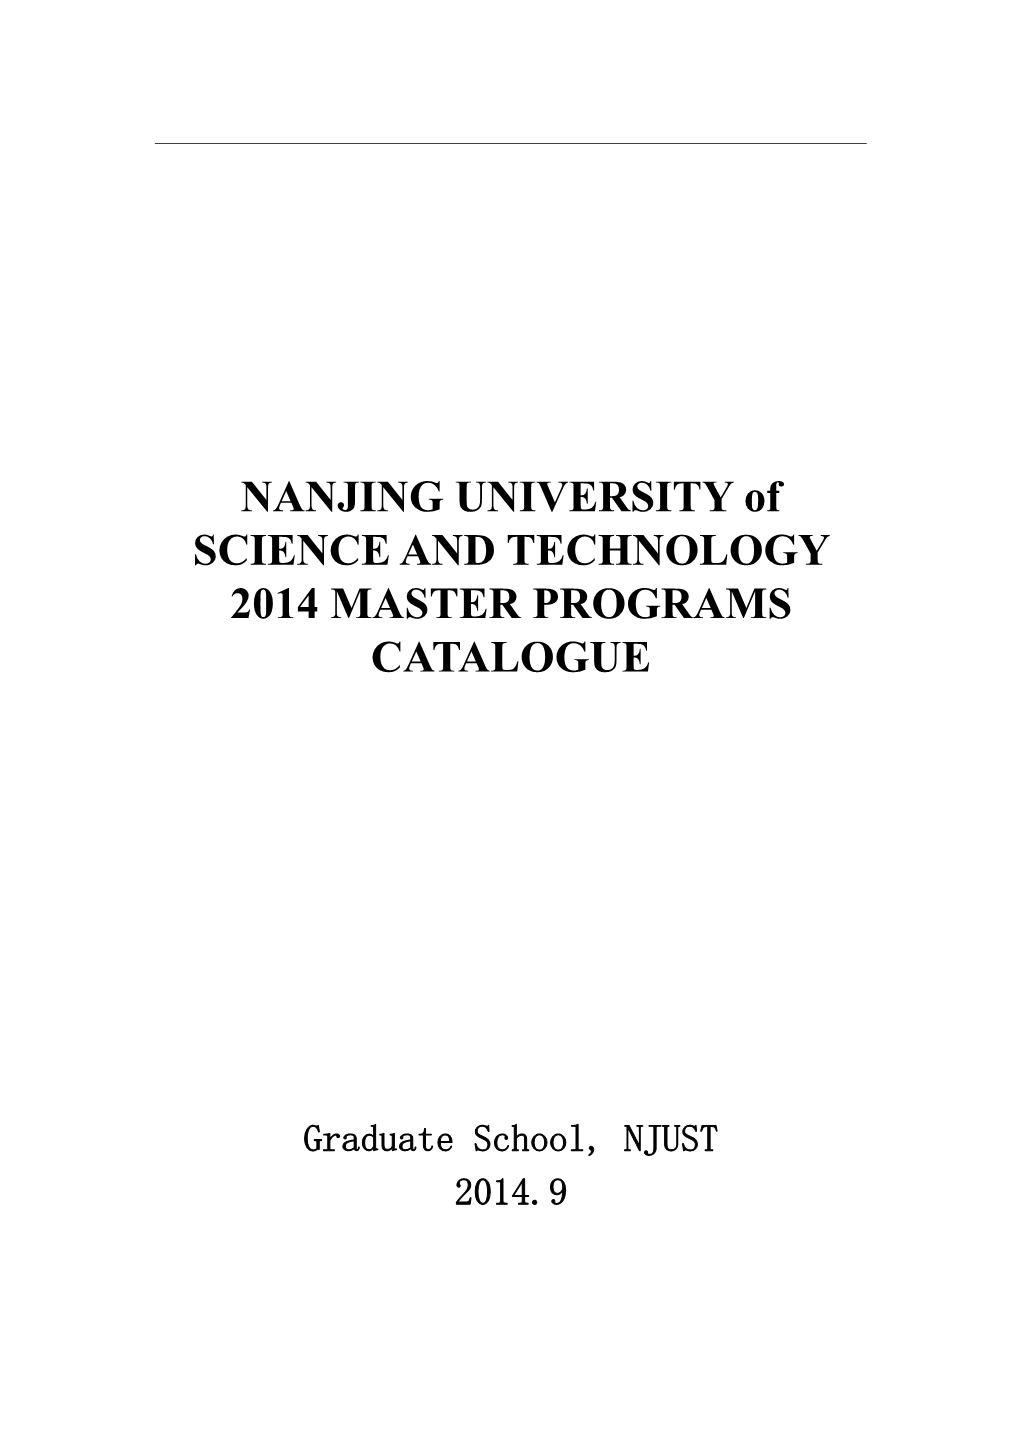 NANJING UNIVERSITY of SCIENCE and TECHNOLOGY 2014 MASTER PROGRAMS CATALOGUE